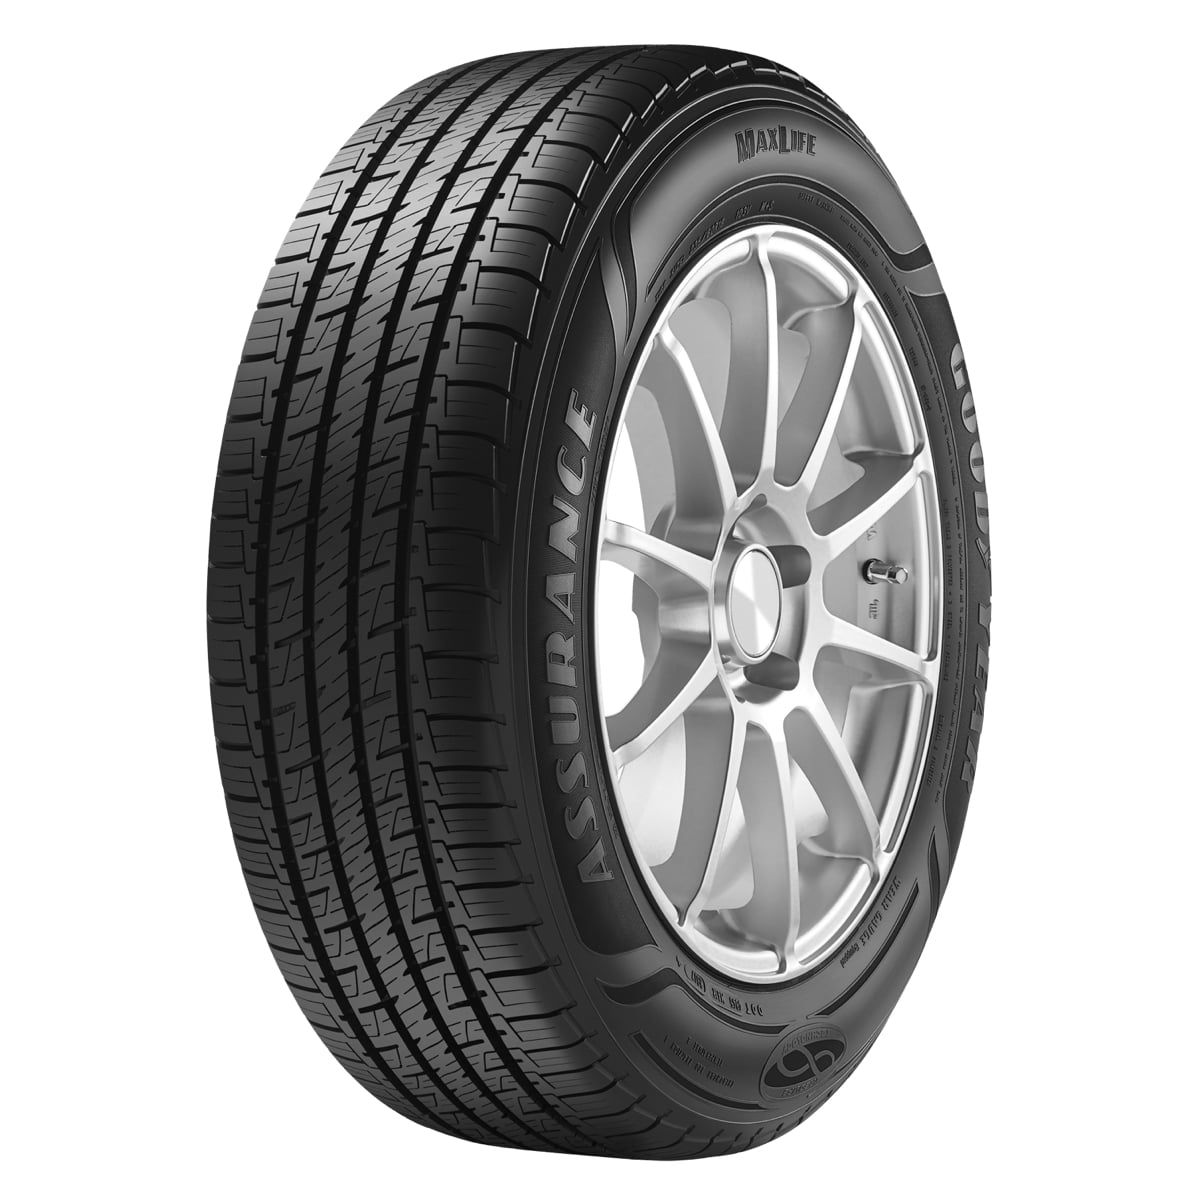 Goodyear Assurance MaxLife 225 60R17 99H AS All Season A S Tire 